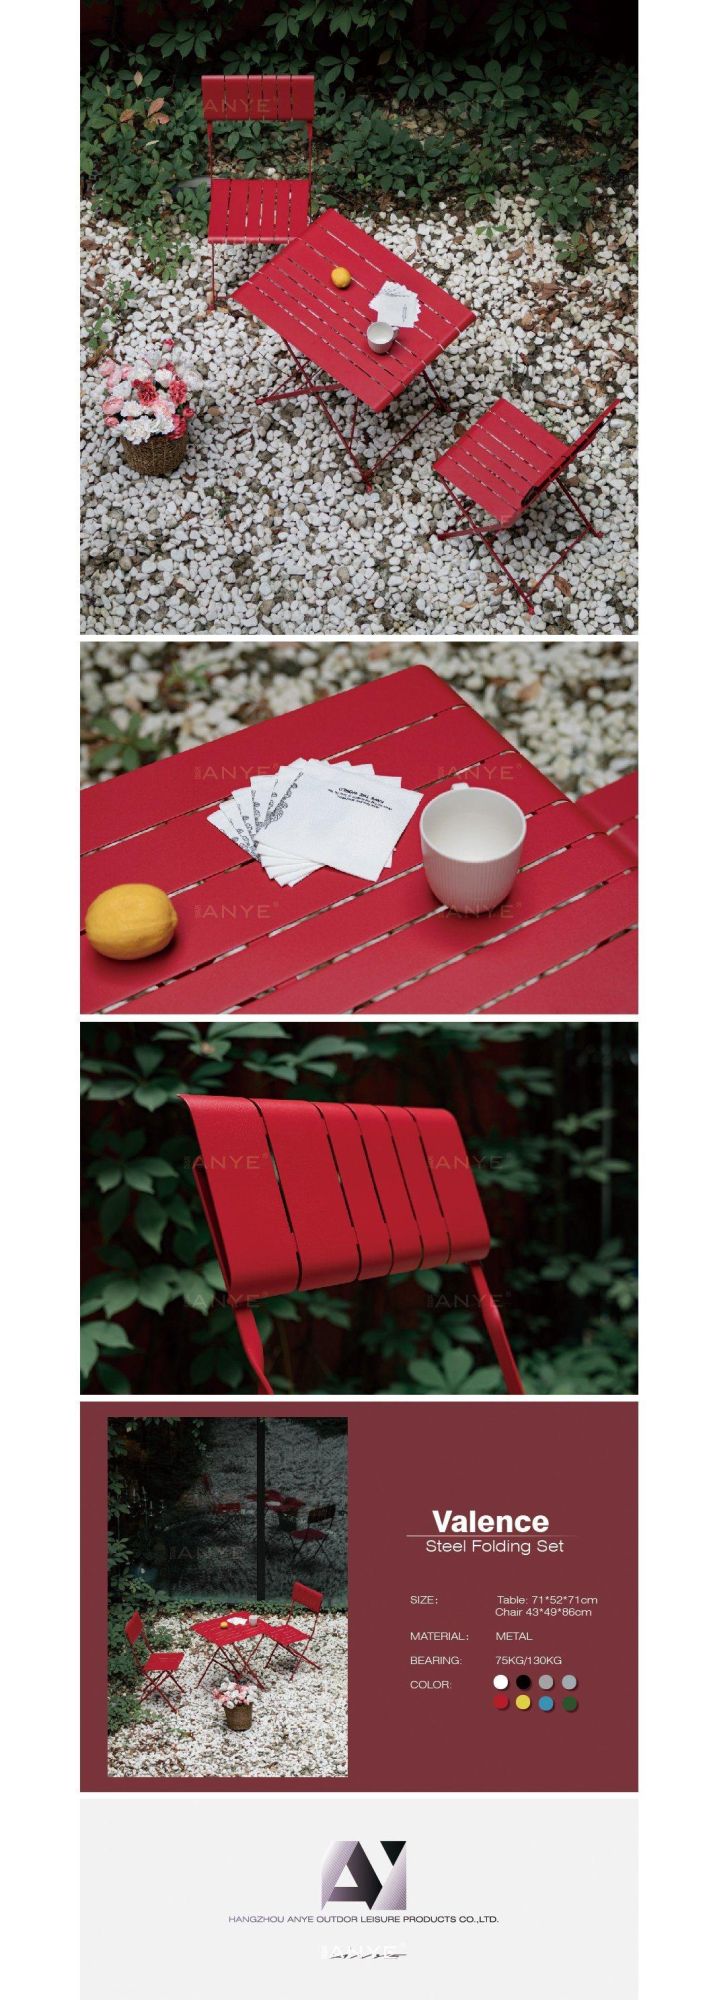 Steel Slats Waterproof Dining Table Folding Chair Set Outdoor Garden Furniture